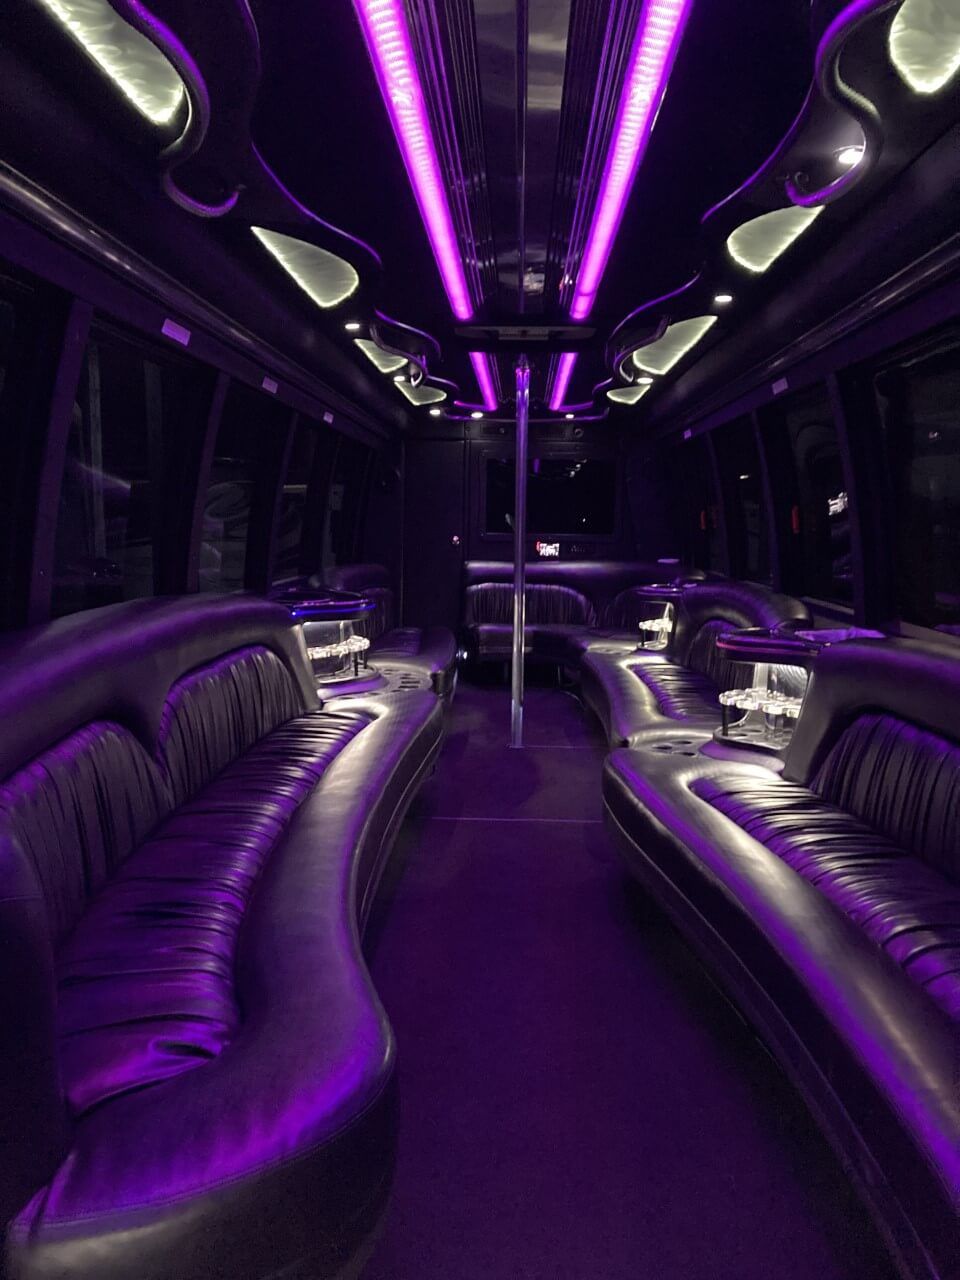 32 passenger party bus rental interior 1